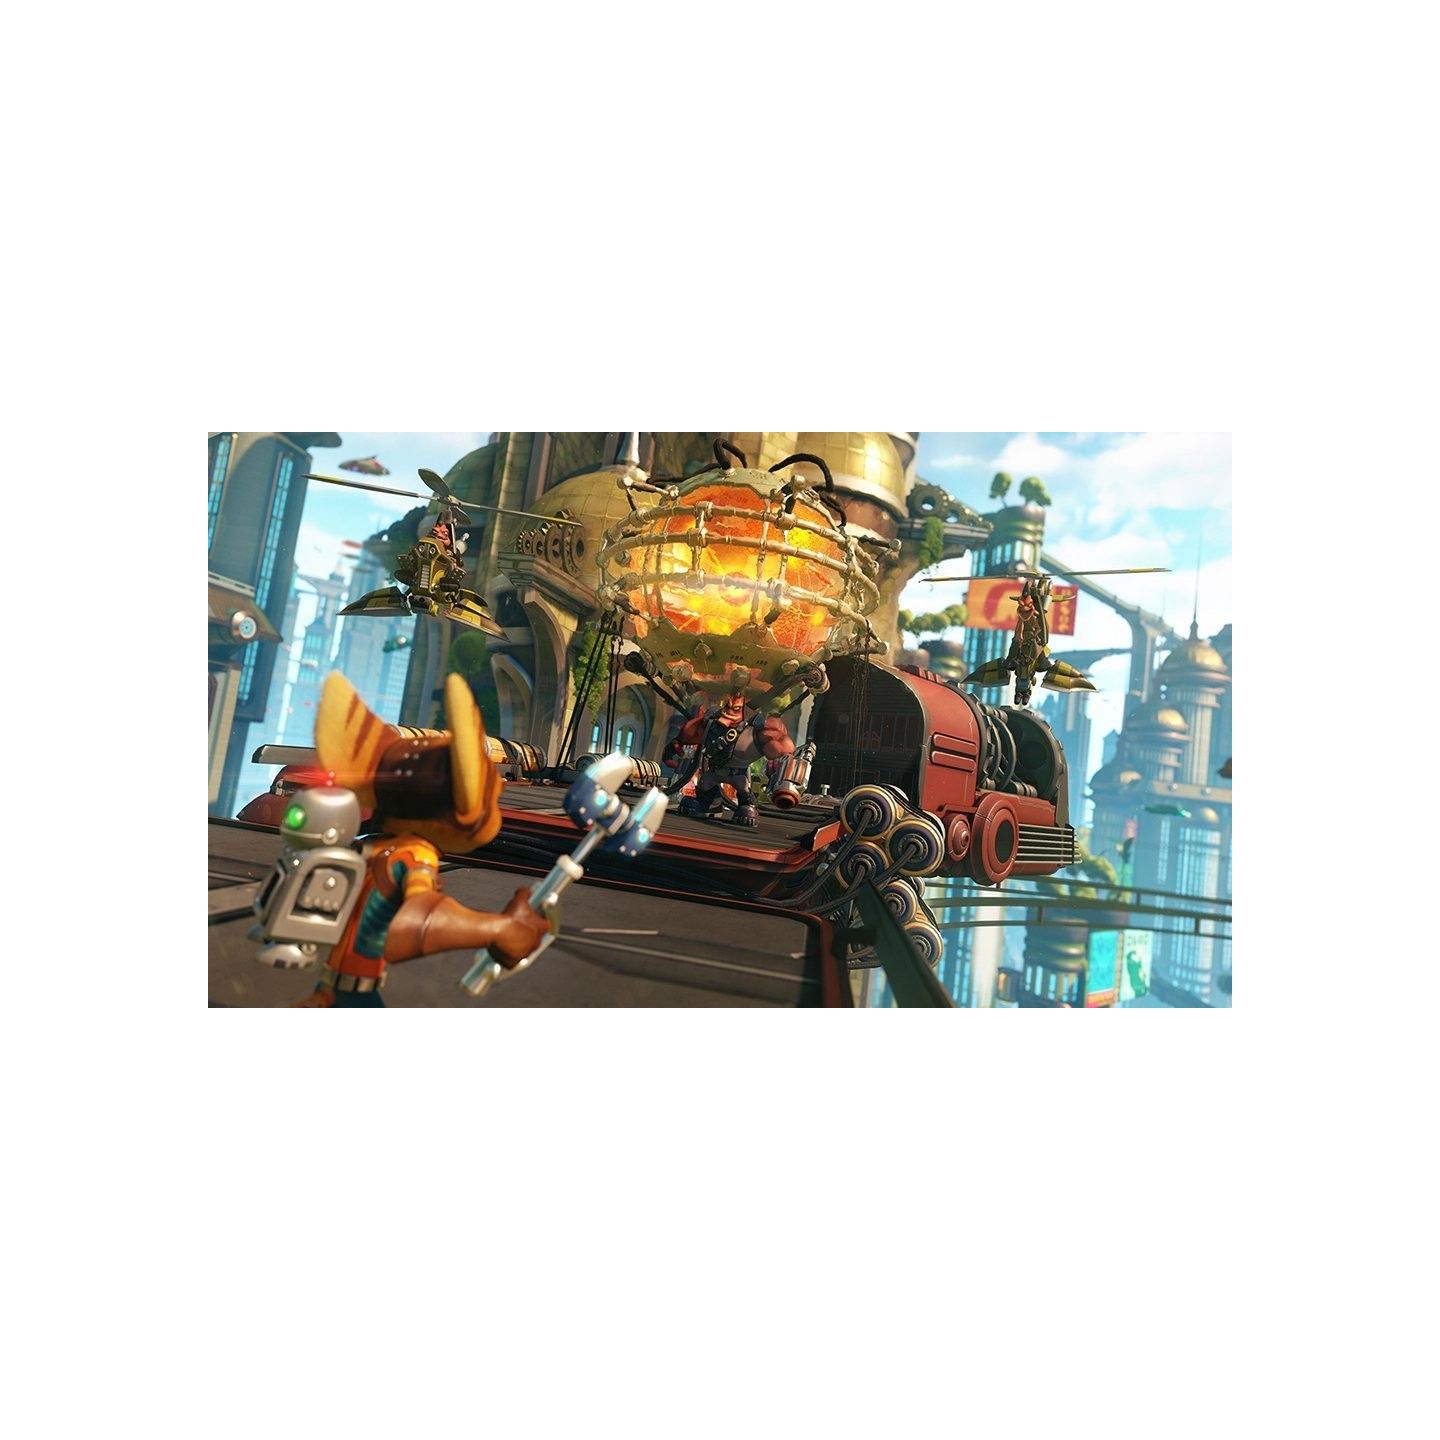 Ratchet & Clank - PlayStation 4 